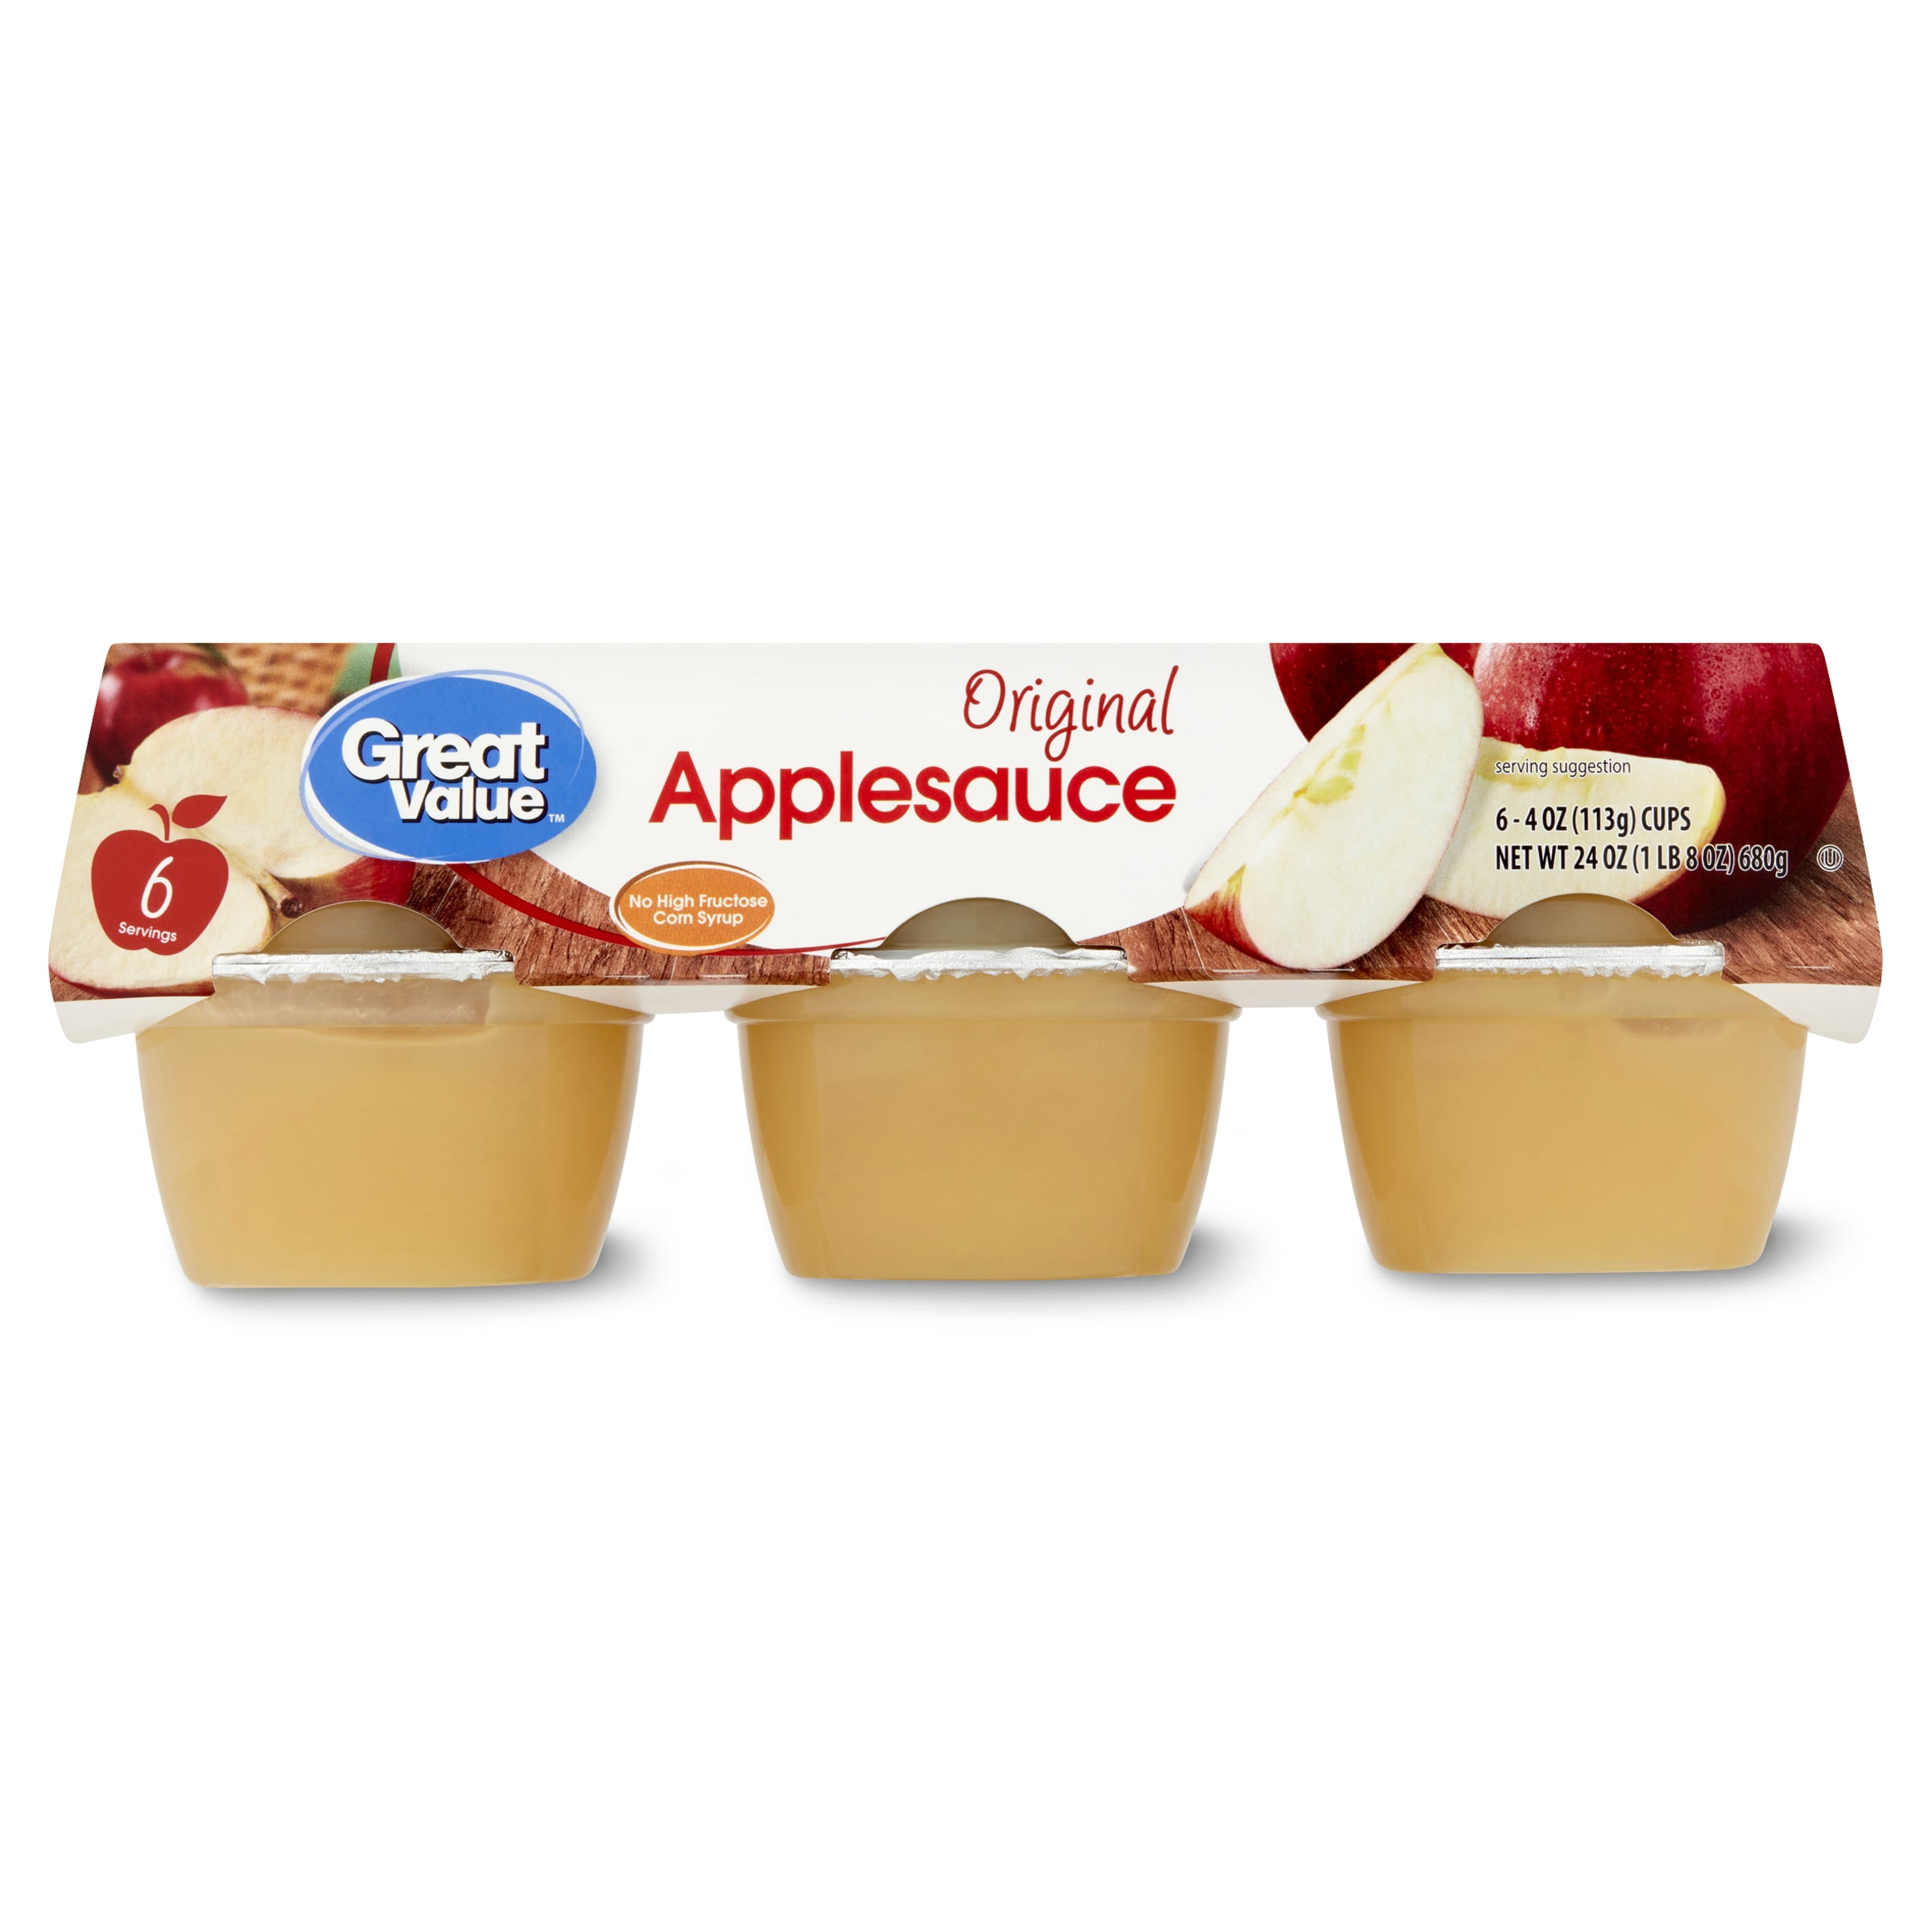 (6 Cups) Great Value Original Applesauce, 4 oz